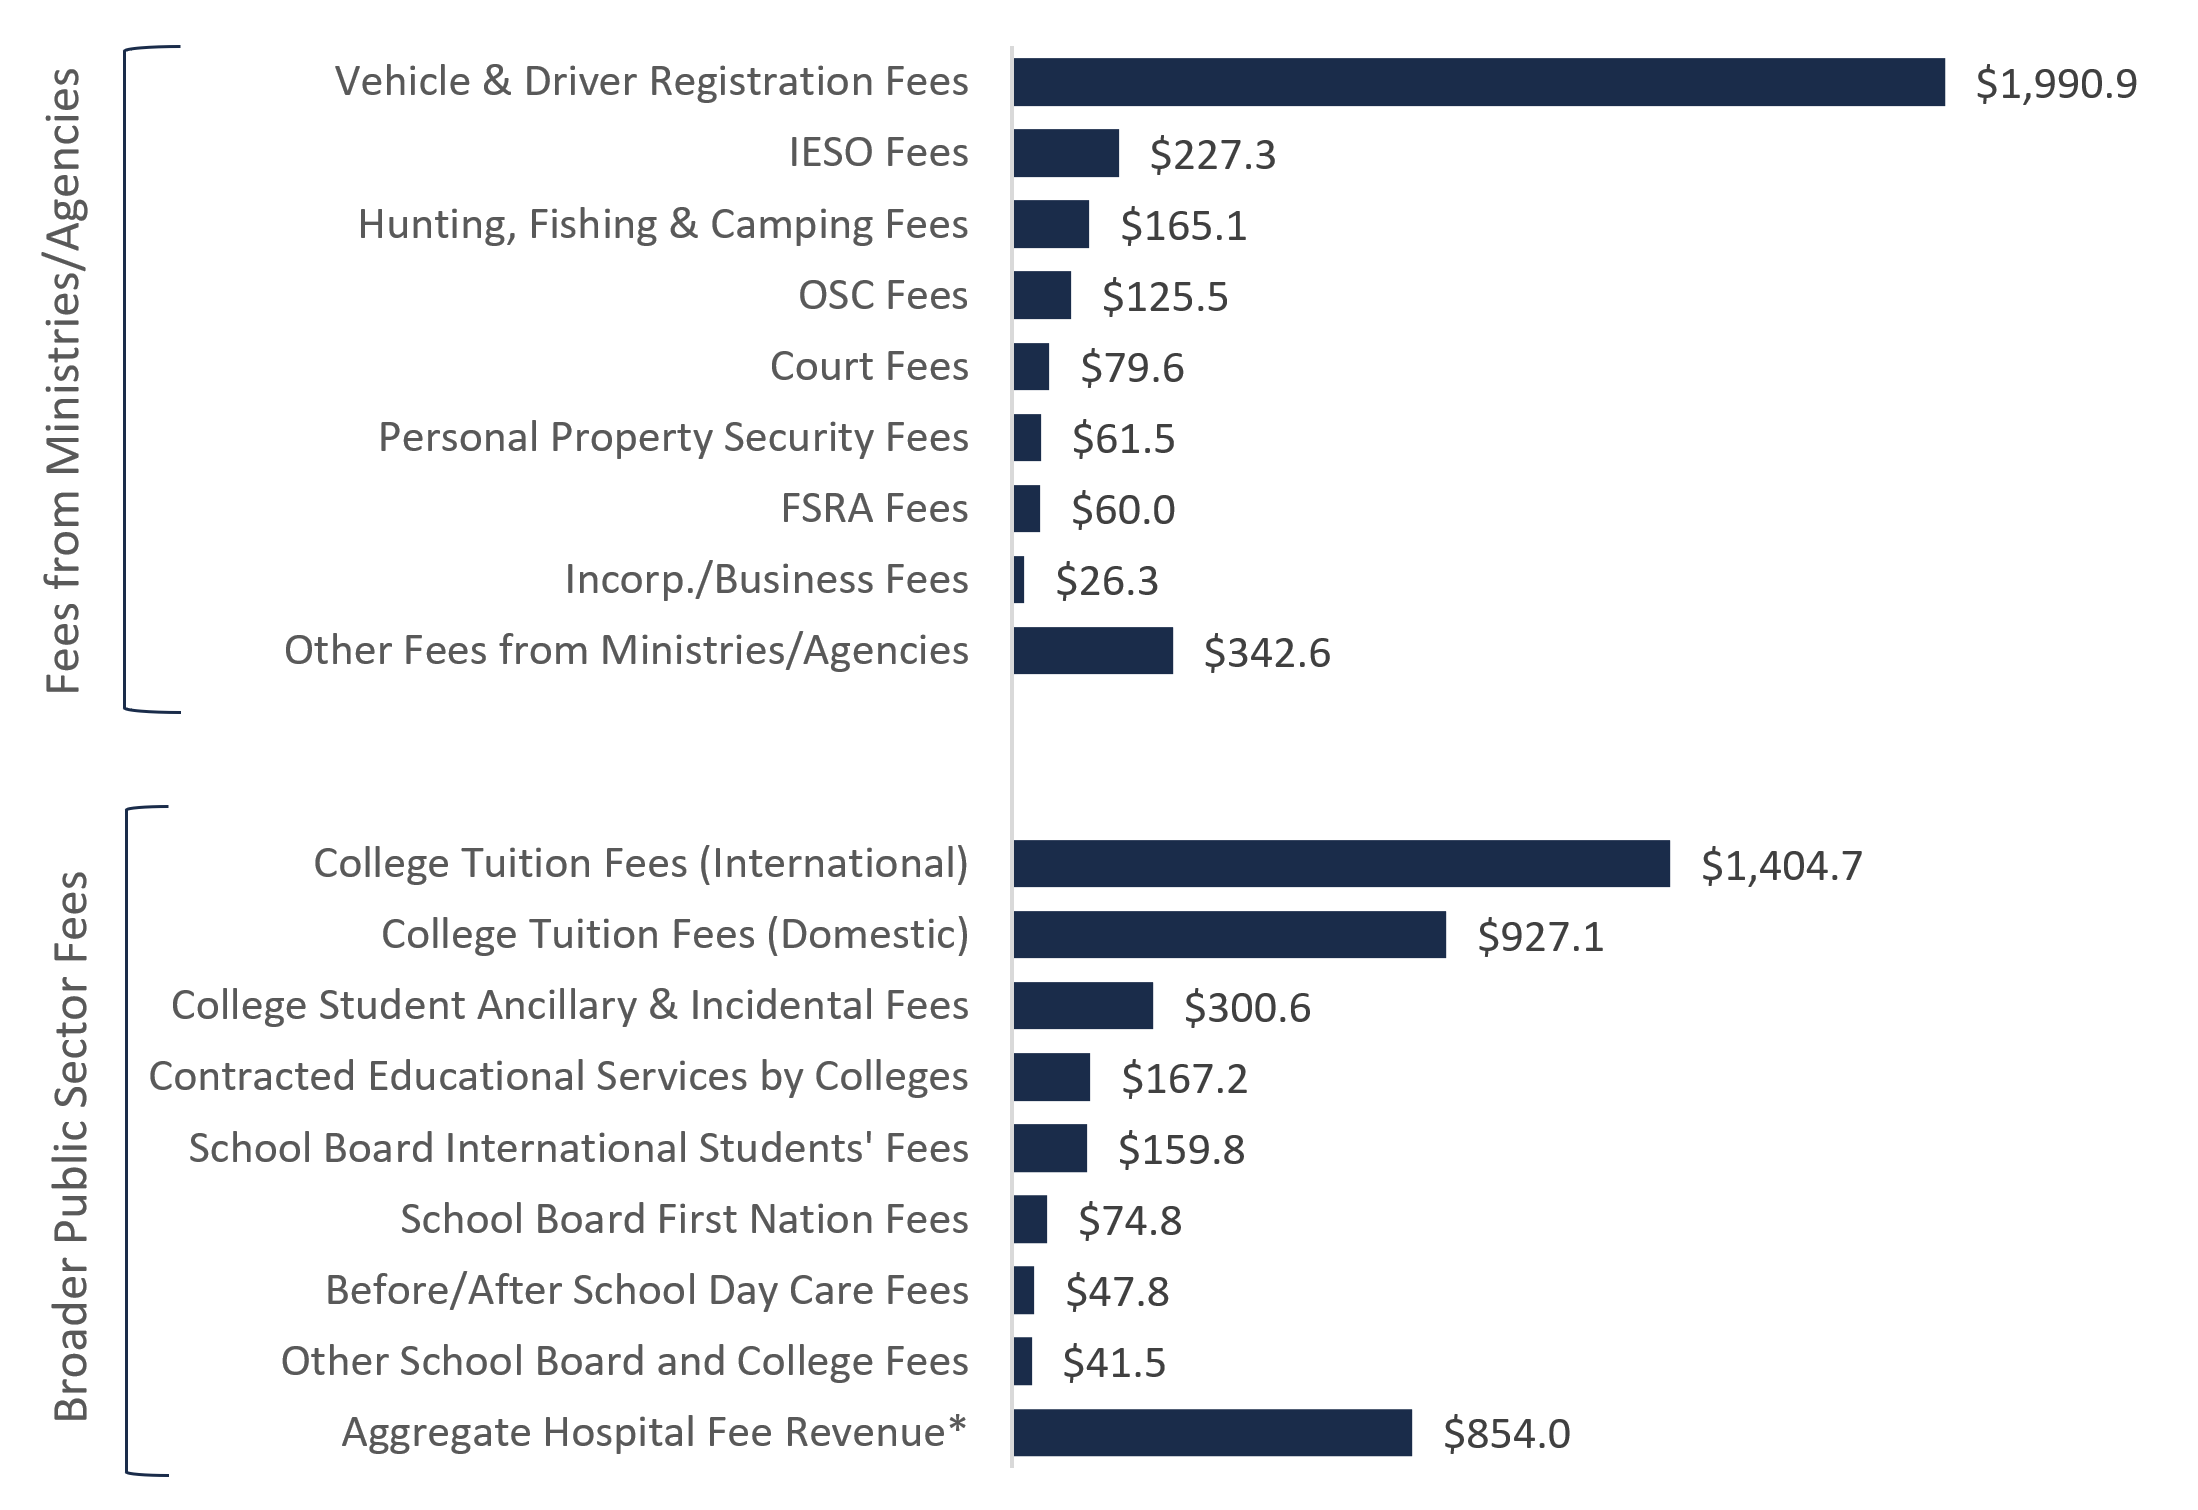 Sources of service fee revenue, 2018-19 ($ millions)